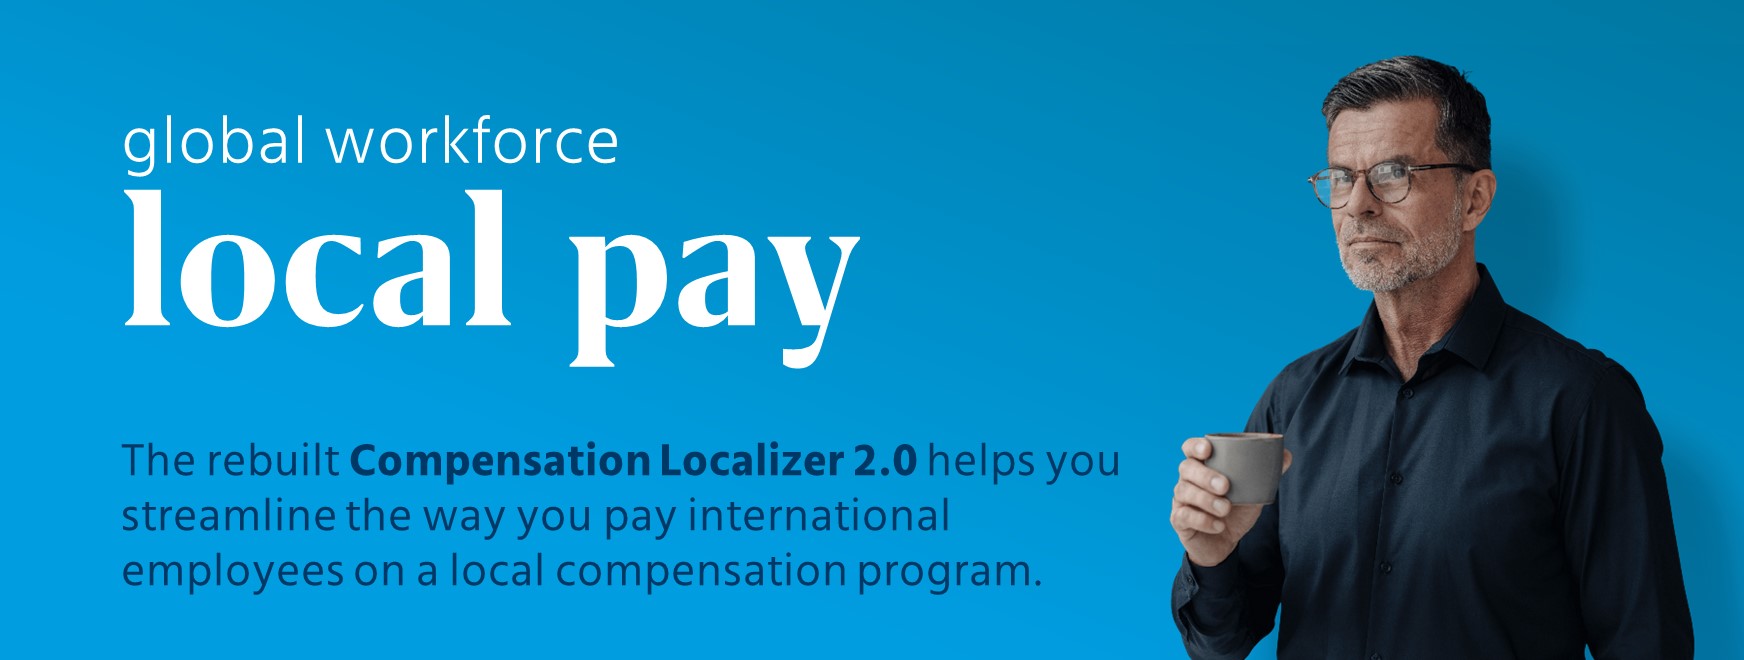 Promotional banner image for Compensation Localizer